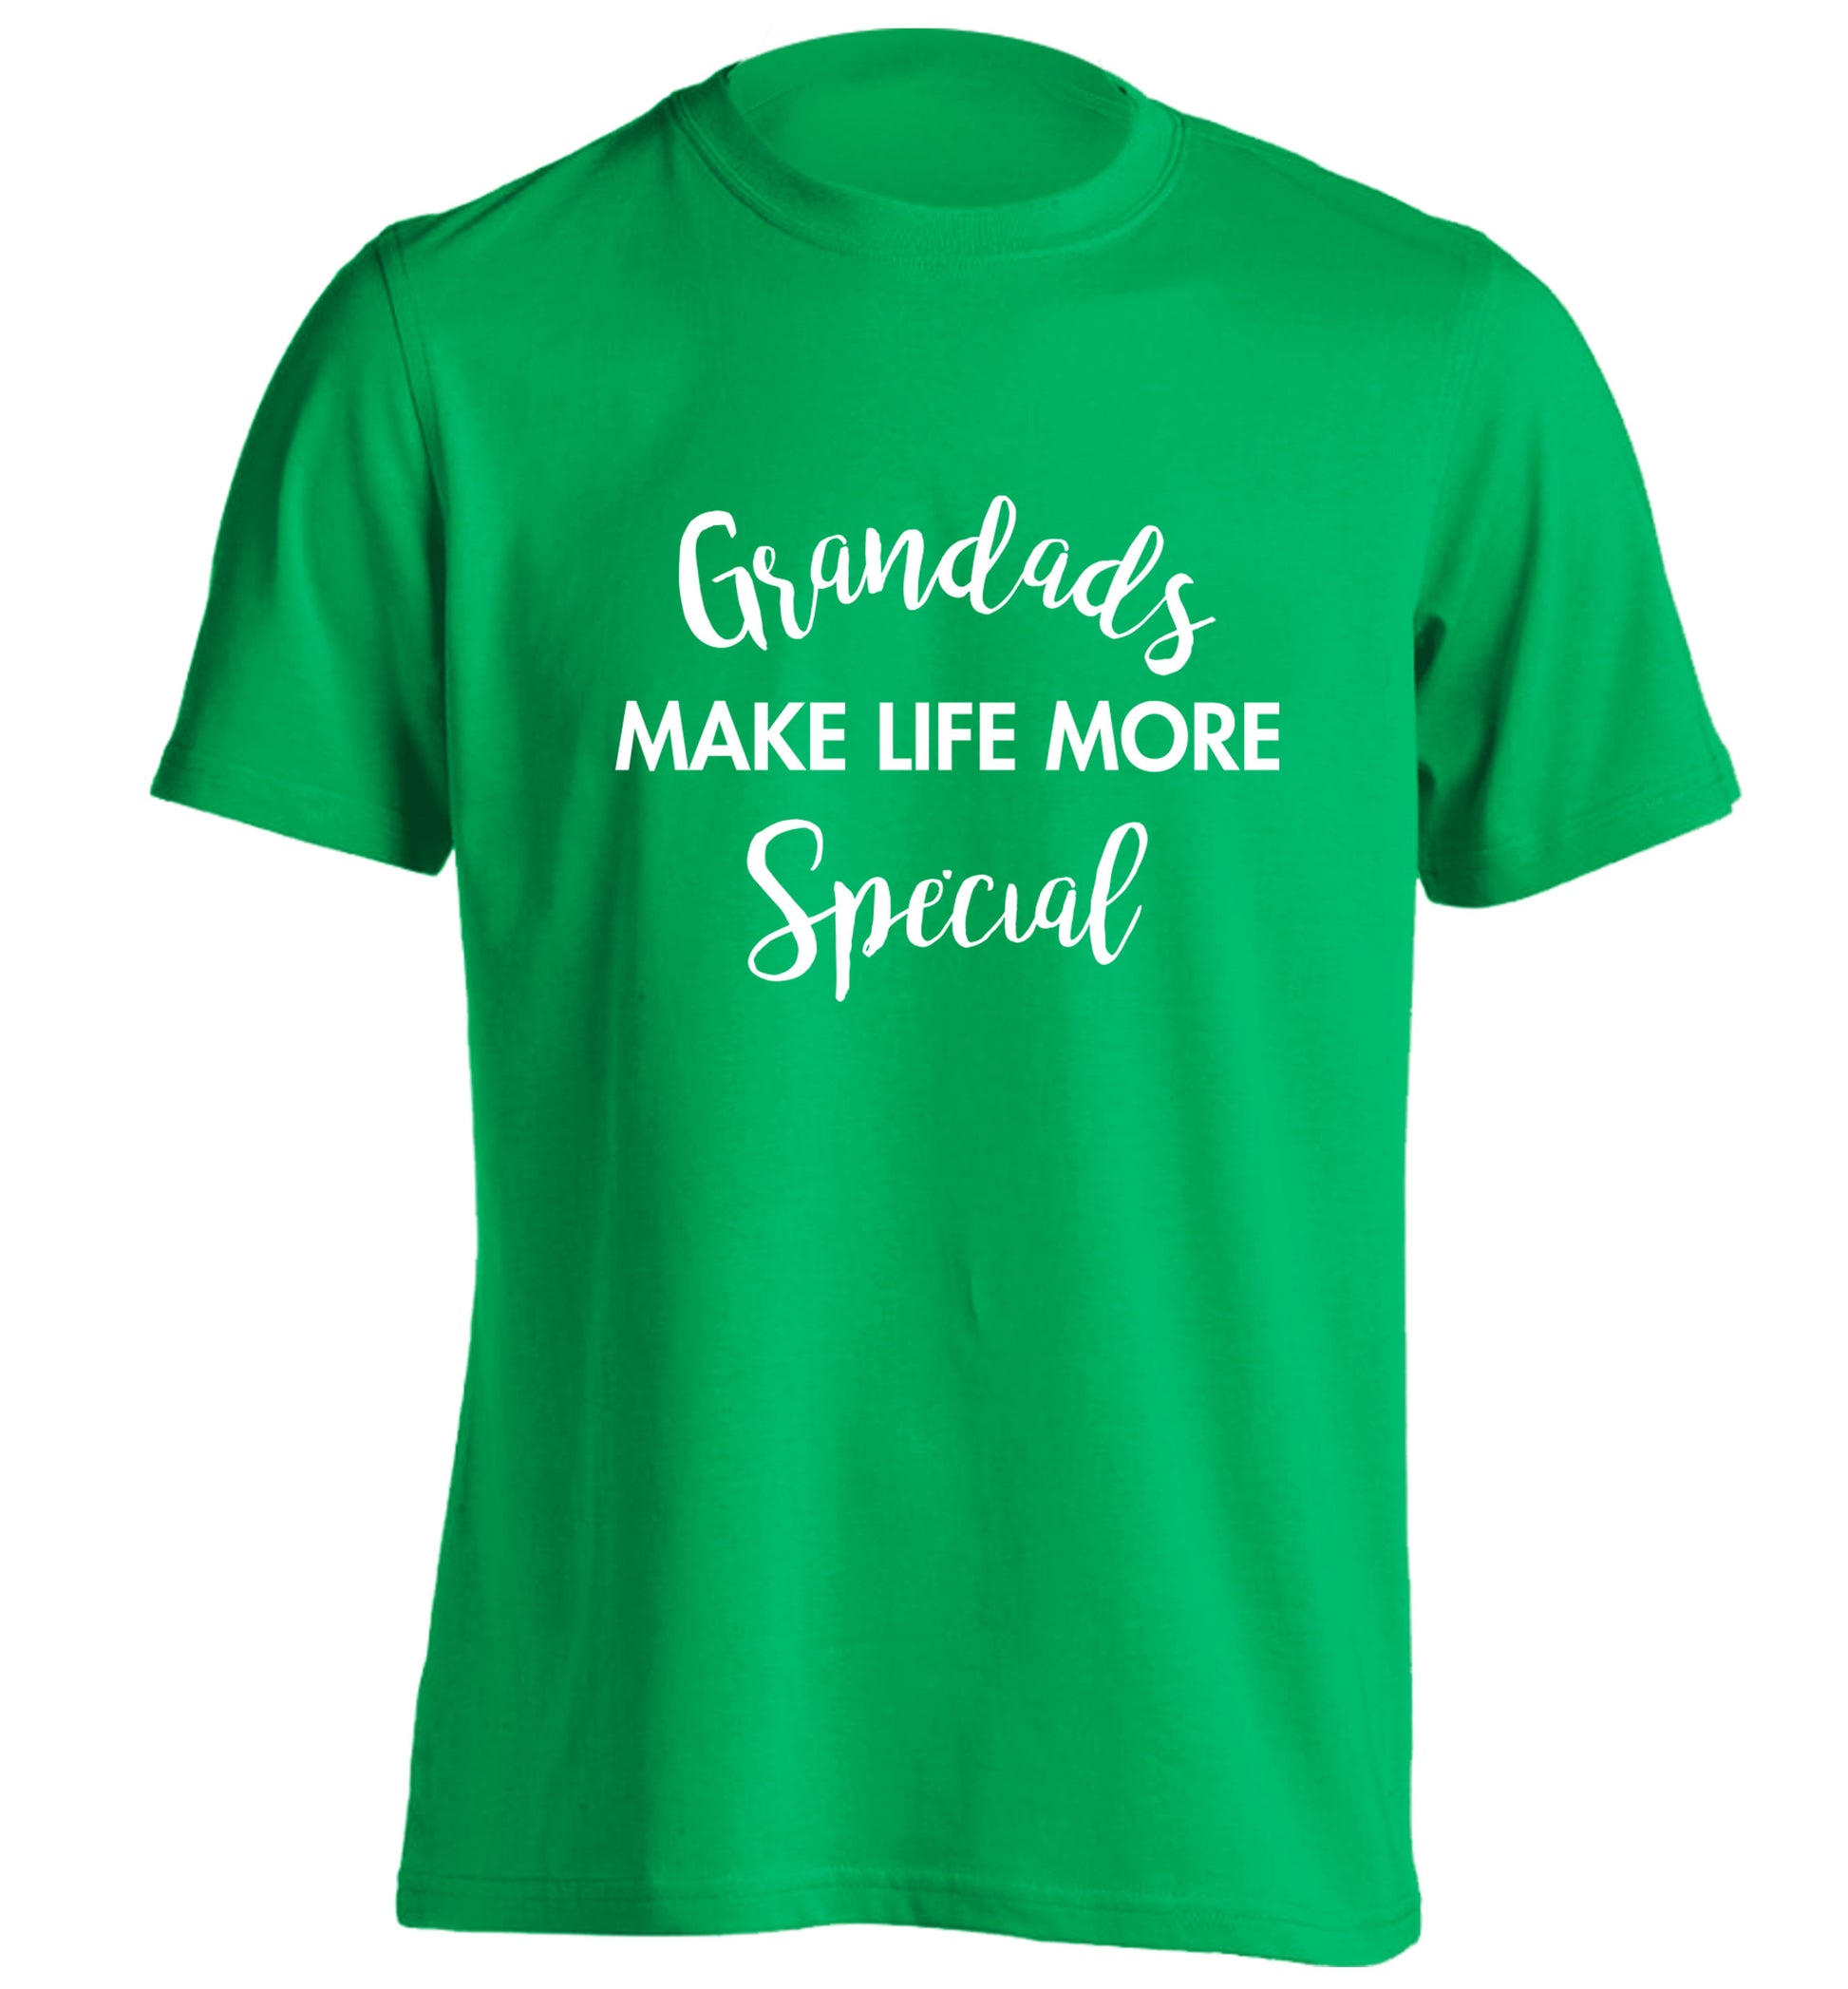 Grandads make life more special adults unisex green Tshirt 2XL